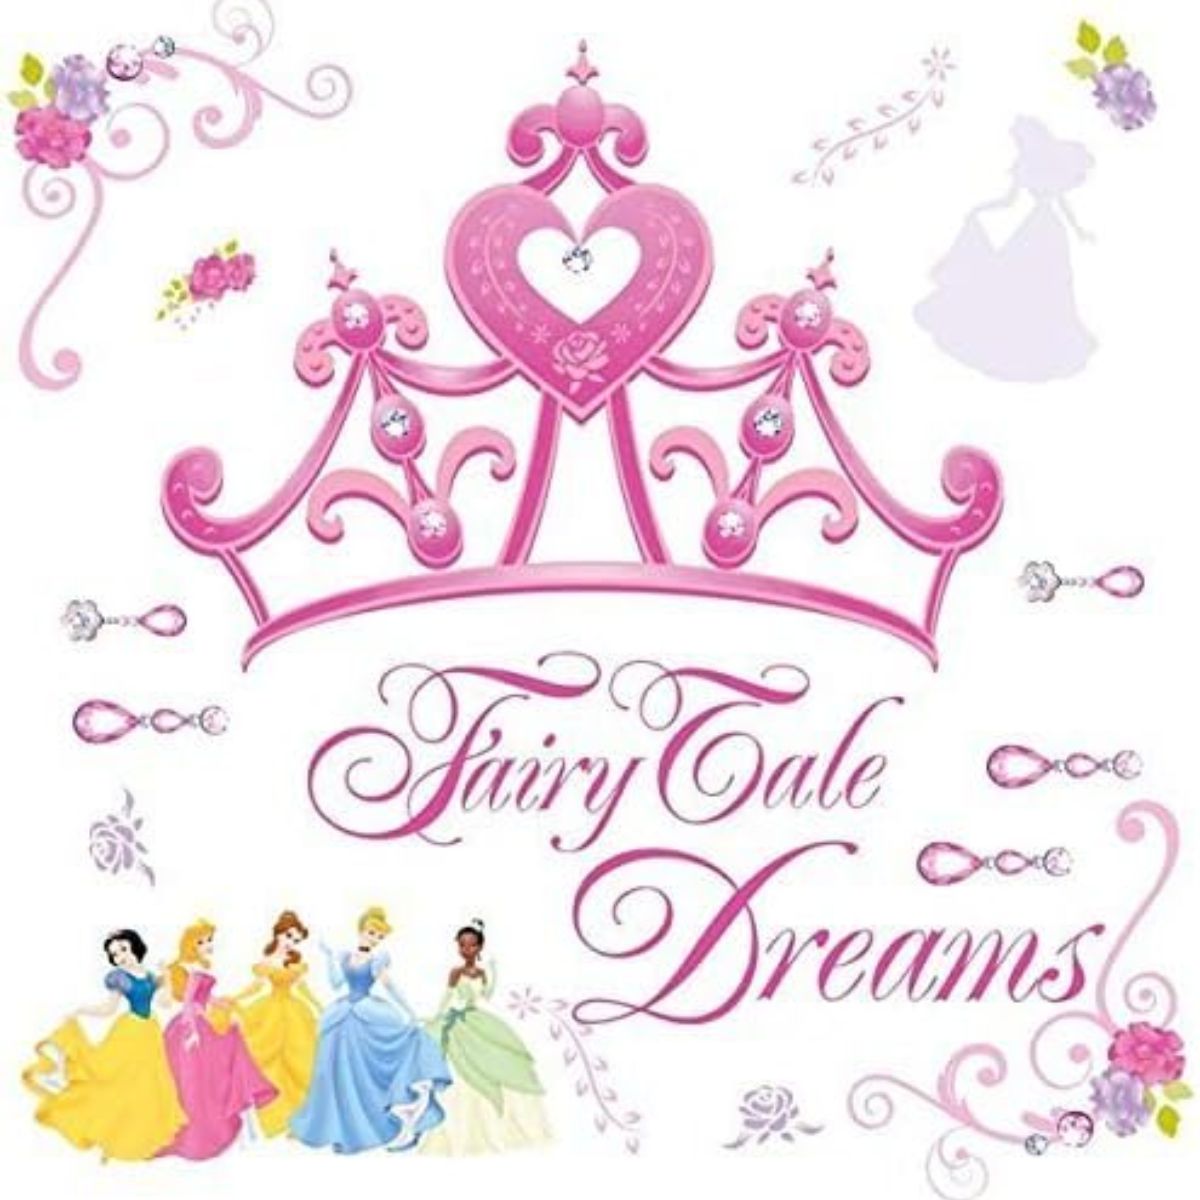 Adesivo Decorativo de Parede Princesas Disney Mini